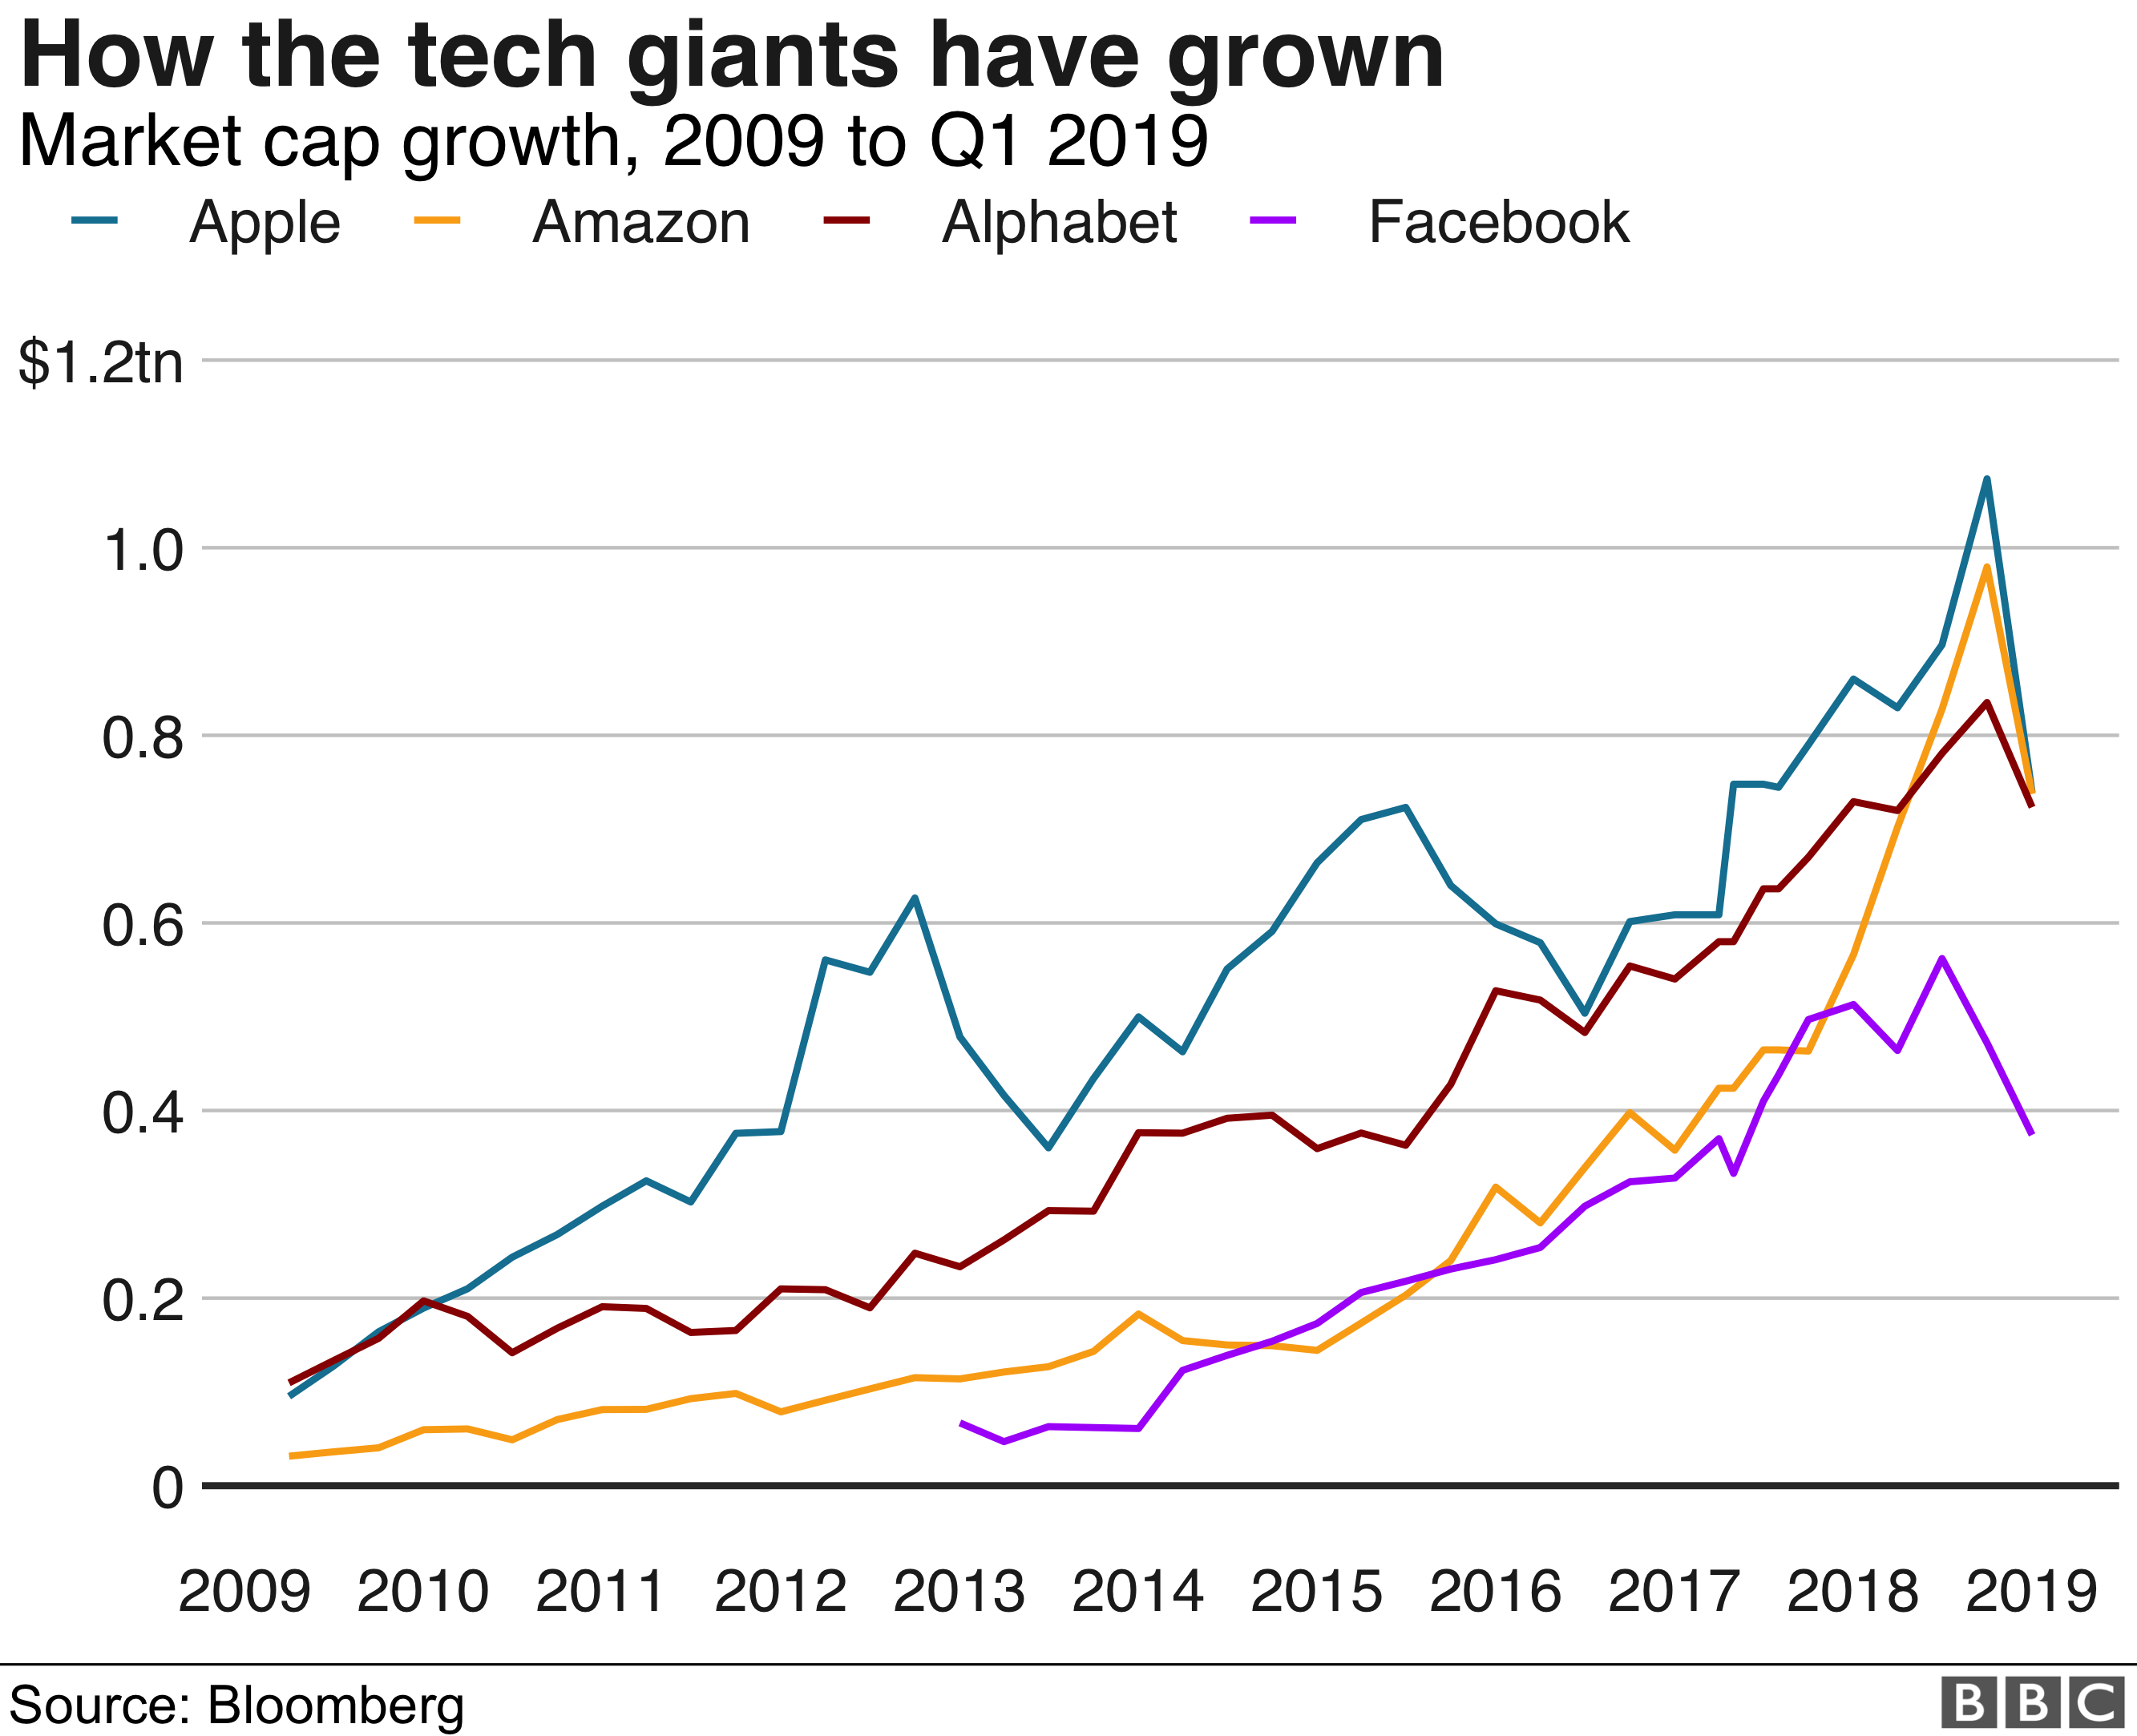 Chart showing market cap growth of Amazon, Google, Apple, Facebook